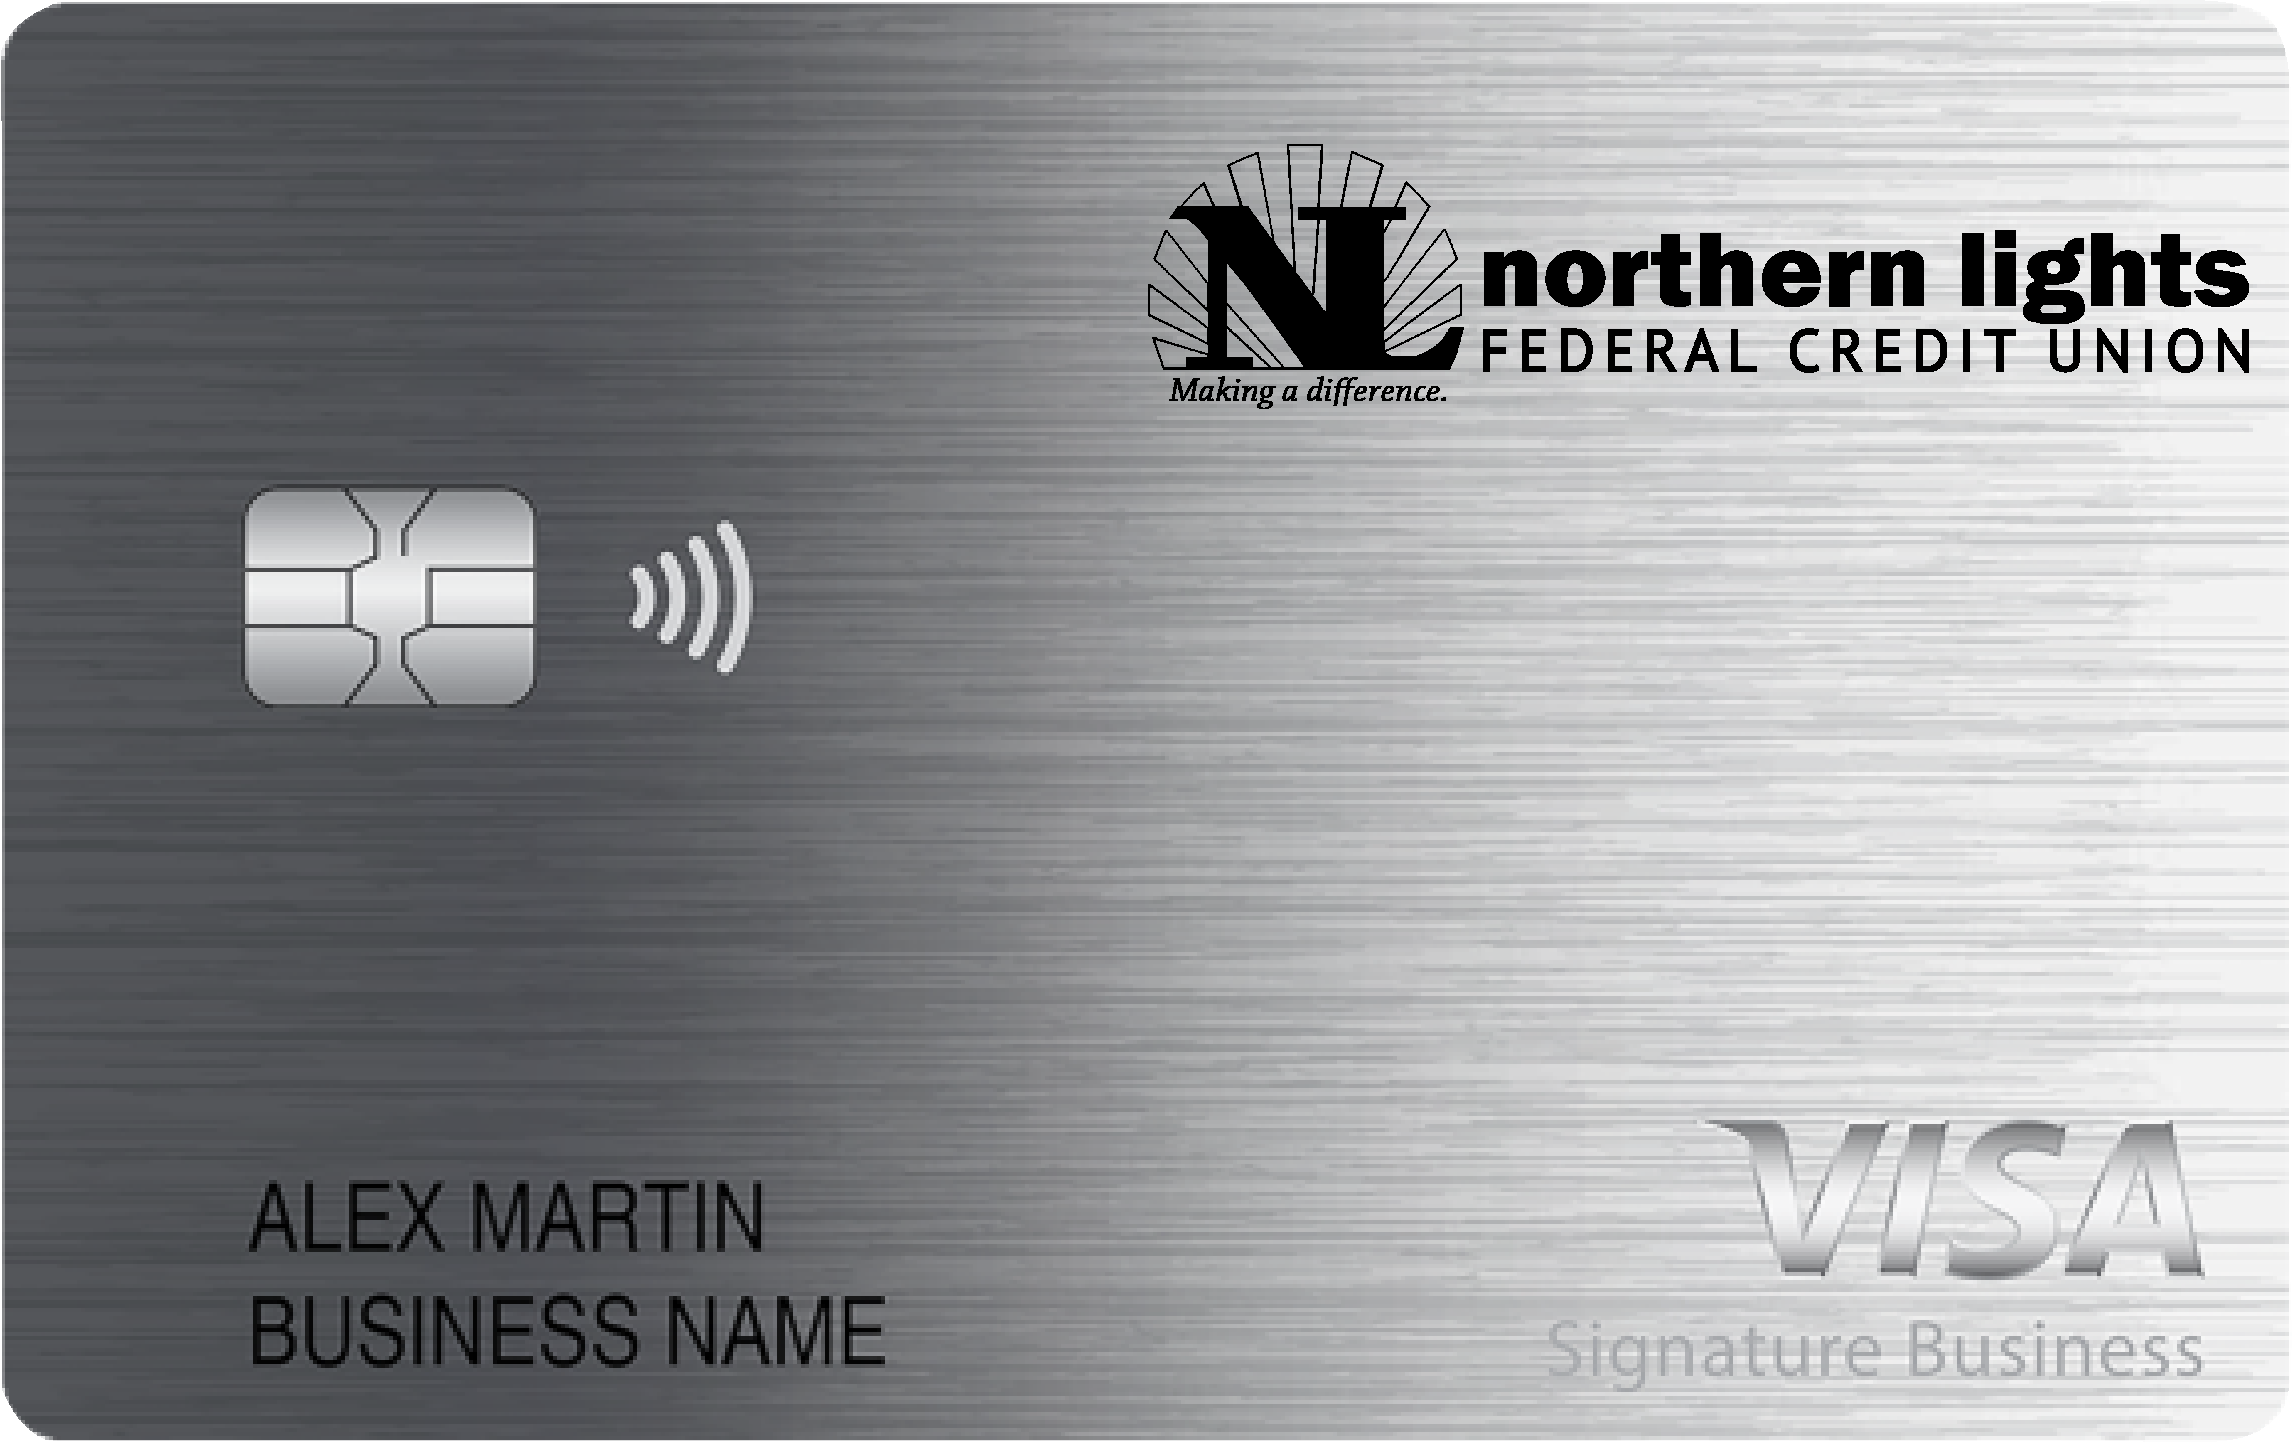 Northern Lights Federal Credit Union Smart Business Rewards Card